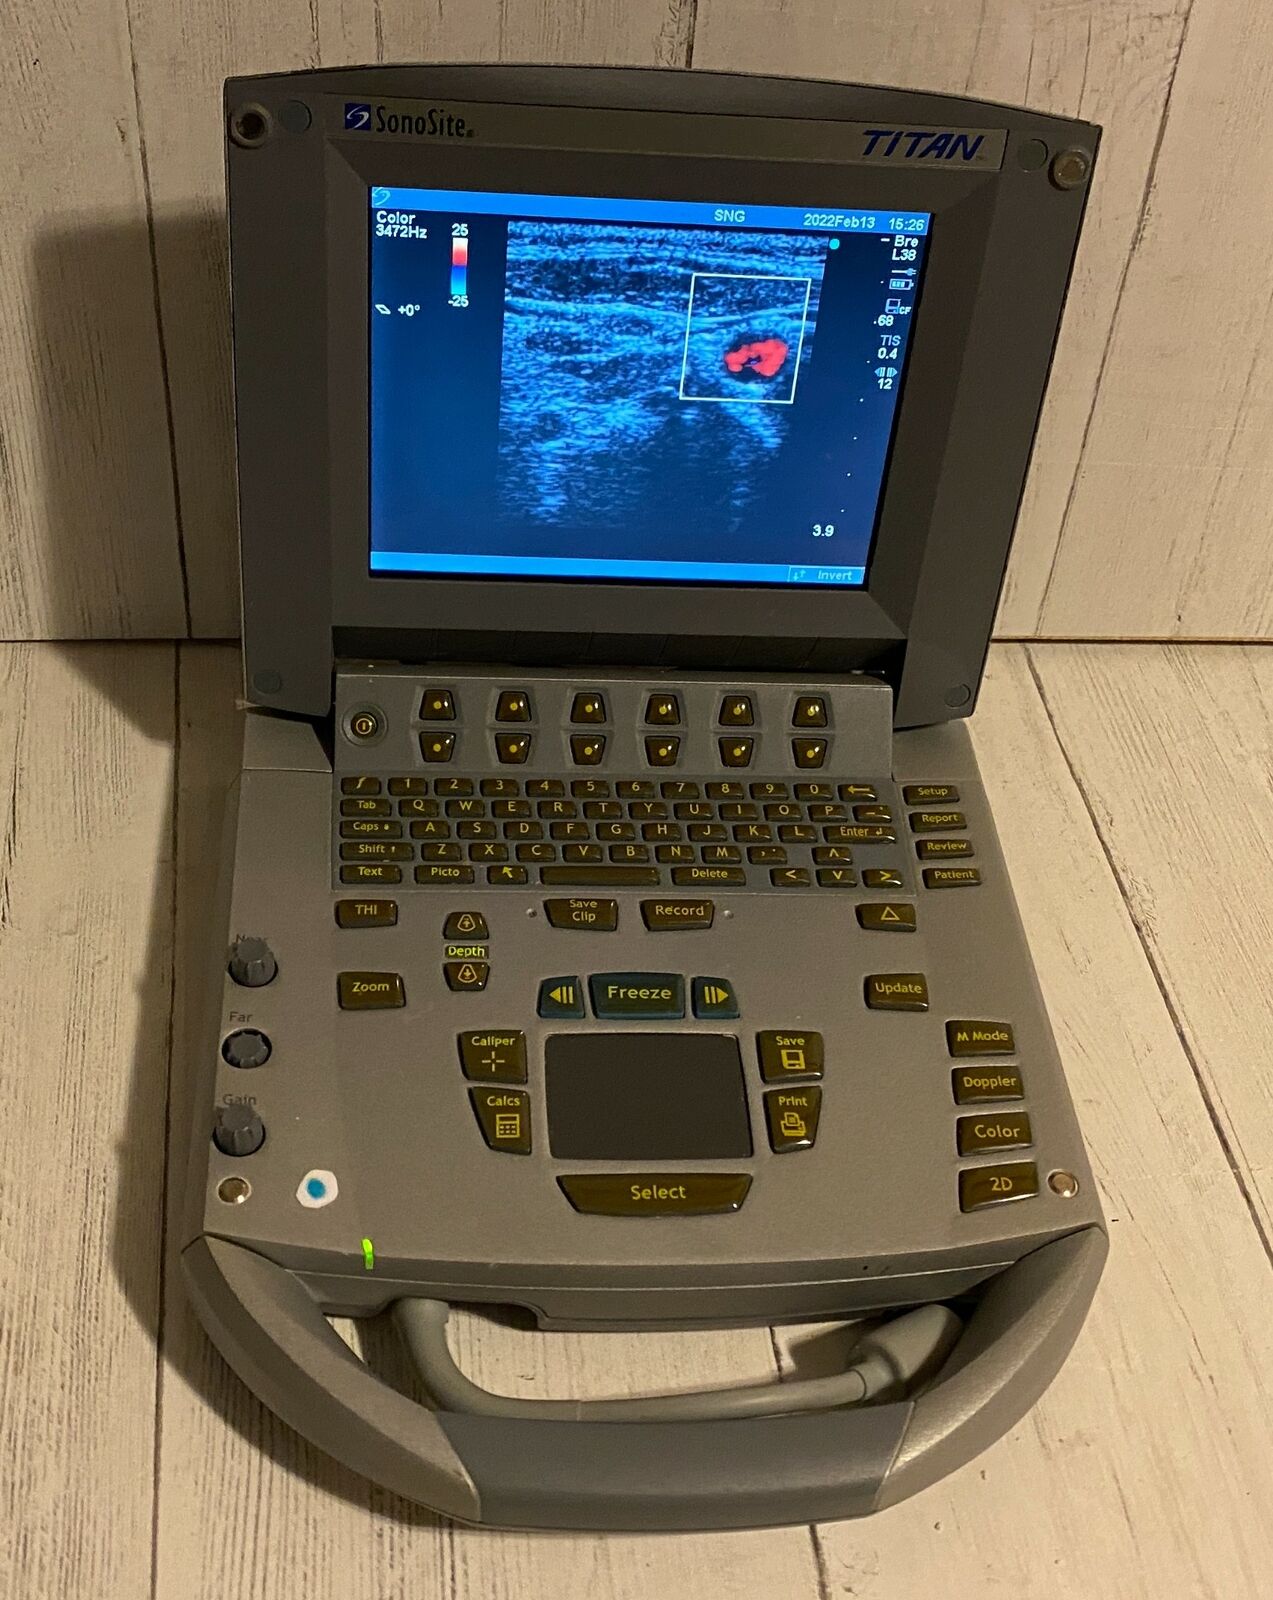 Sonosite Titan Portable Ultrasound 2005 - Main unit